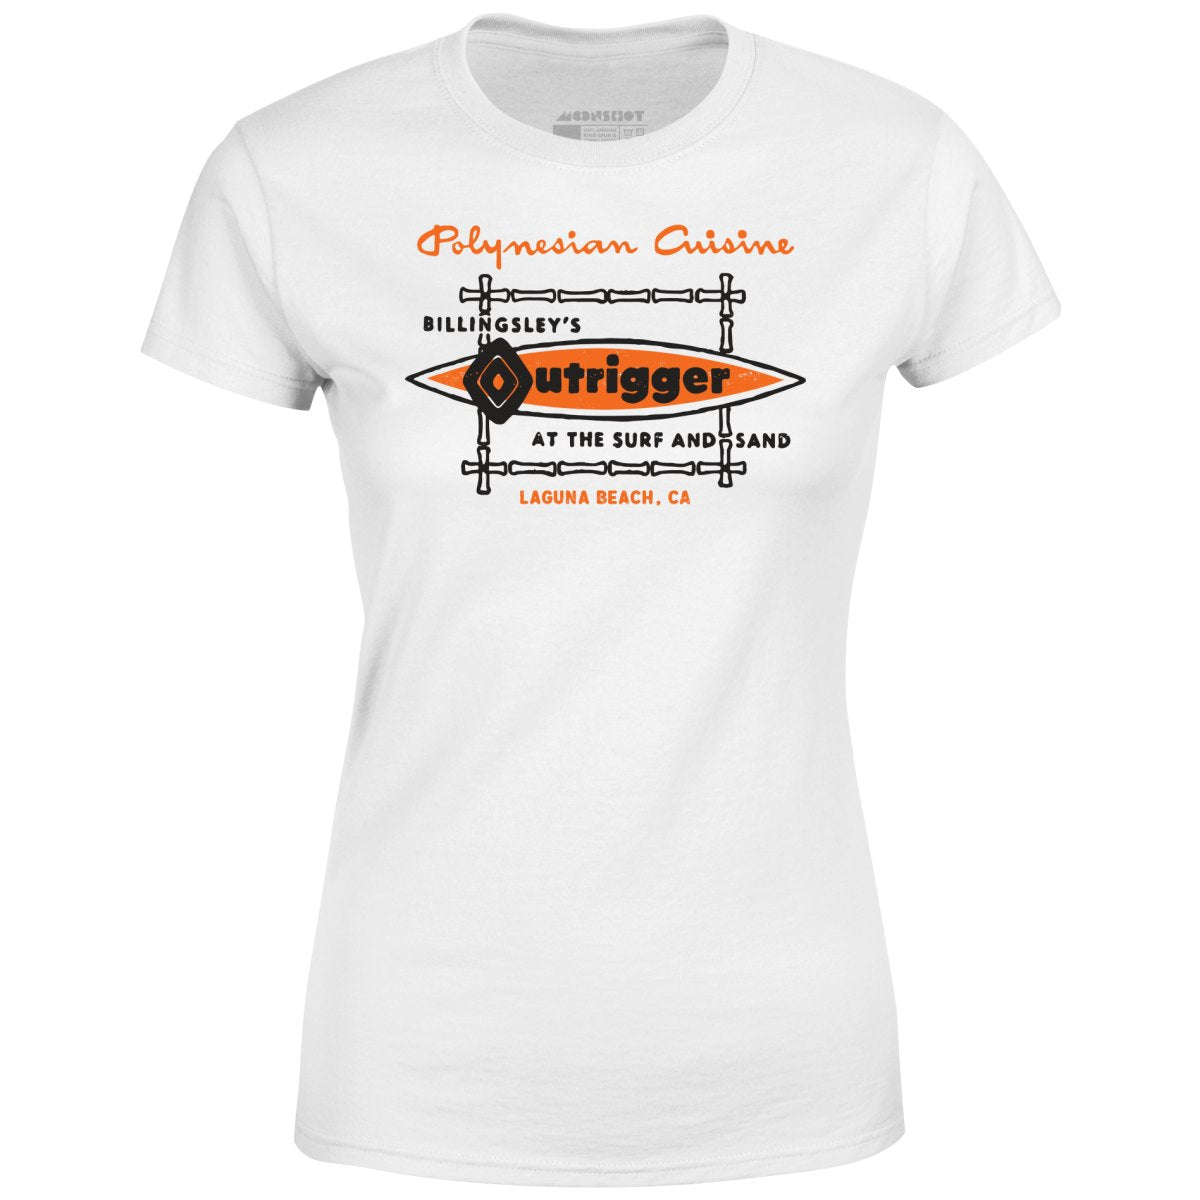 Billingsley's Outrigger - Laguna Beach, CA - Vintage Tiki Bar - Women's T-Shirt